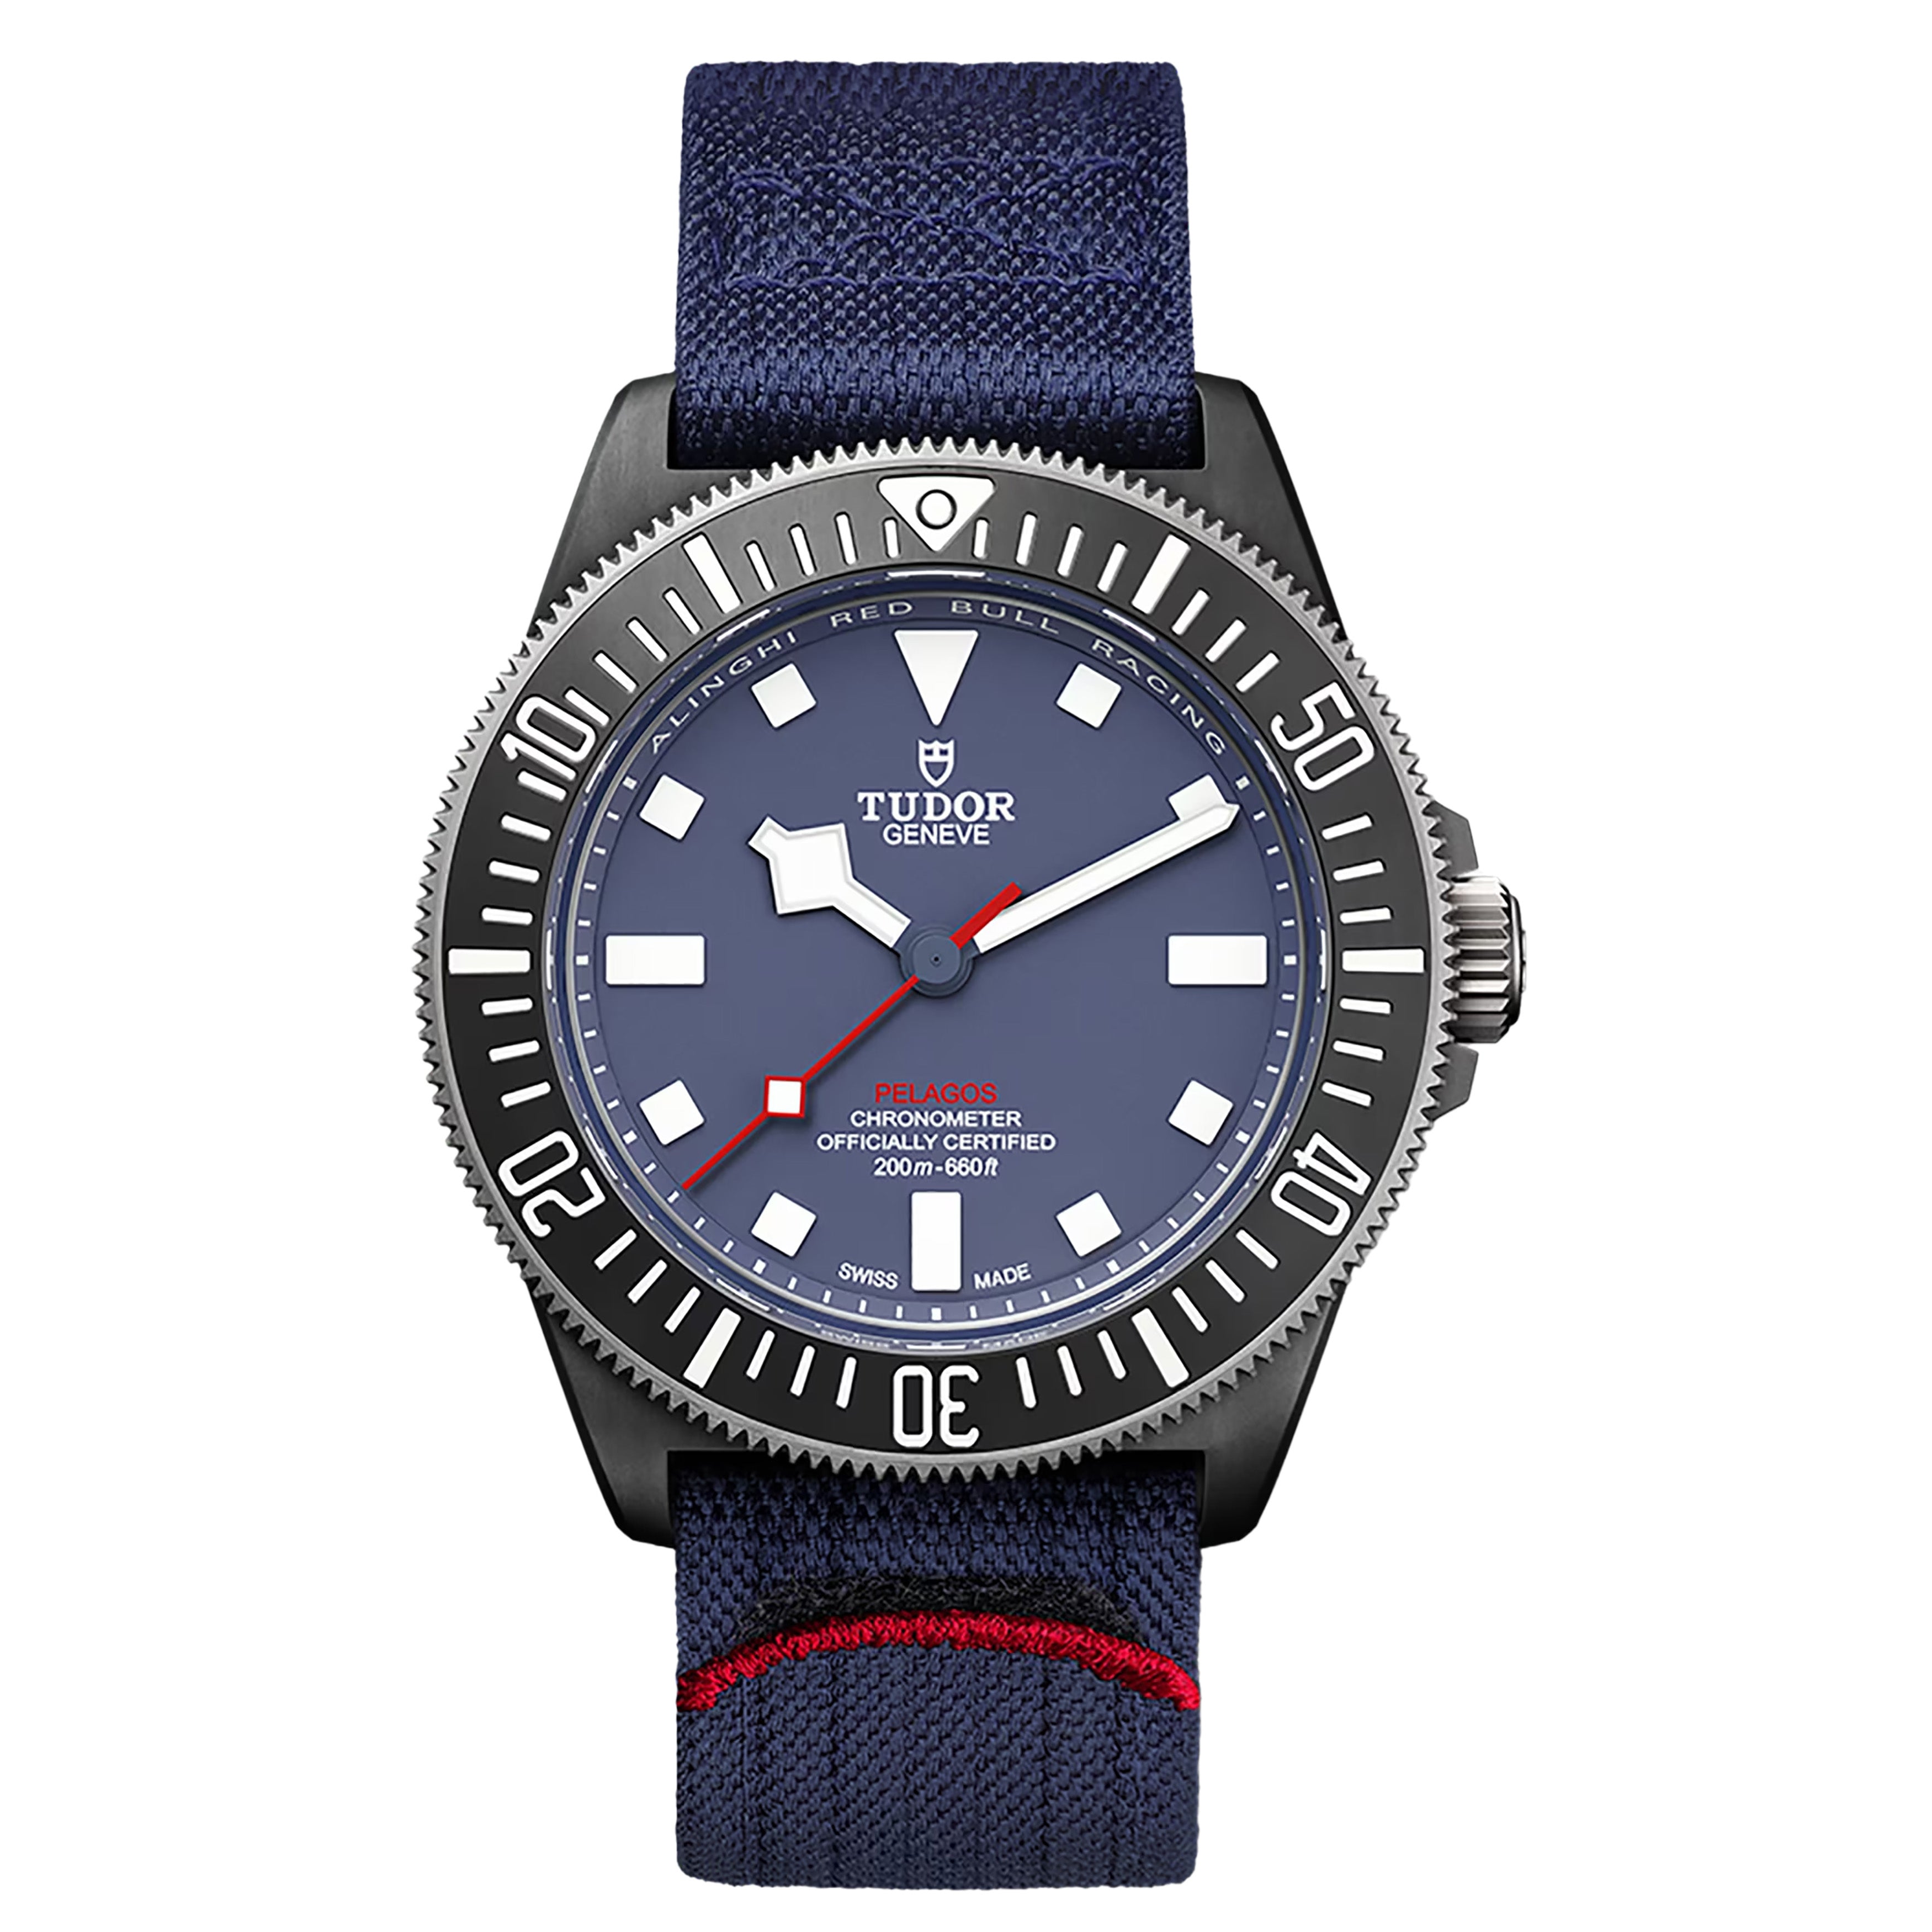 Tudor Pelagos FXD Alinghi Red Bull Racing Watch, 42mm Blue Dial, M25707LN-0001